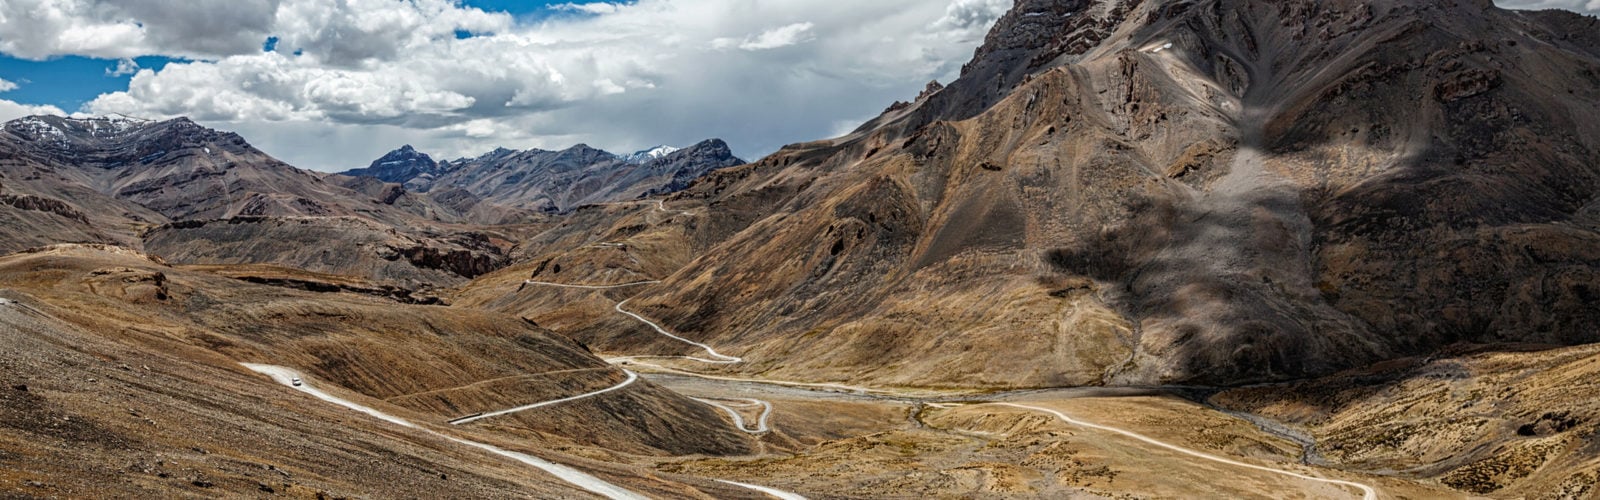 ladakh-landscape-roads